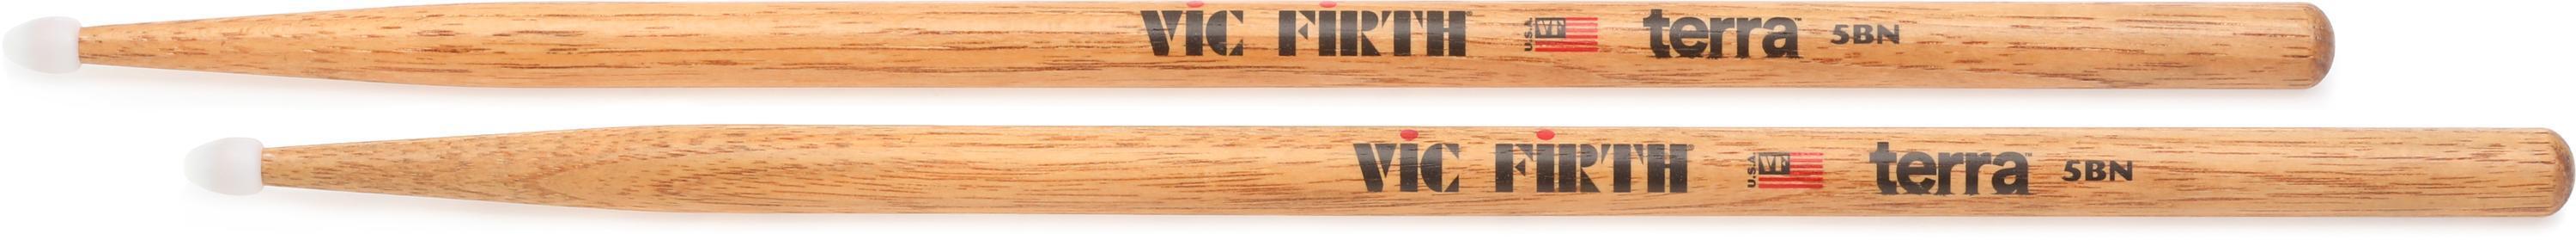 Vic Firth American Classic Terra Drumsticks - 5B Nylon Tip